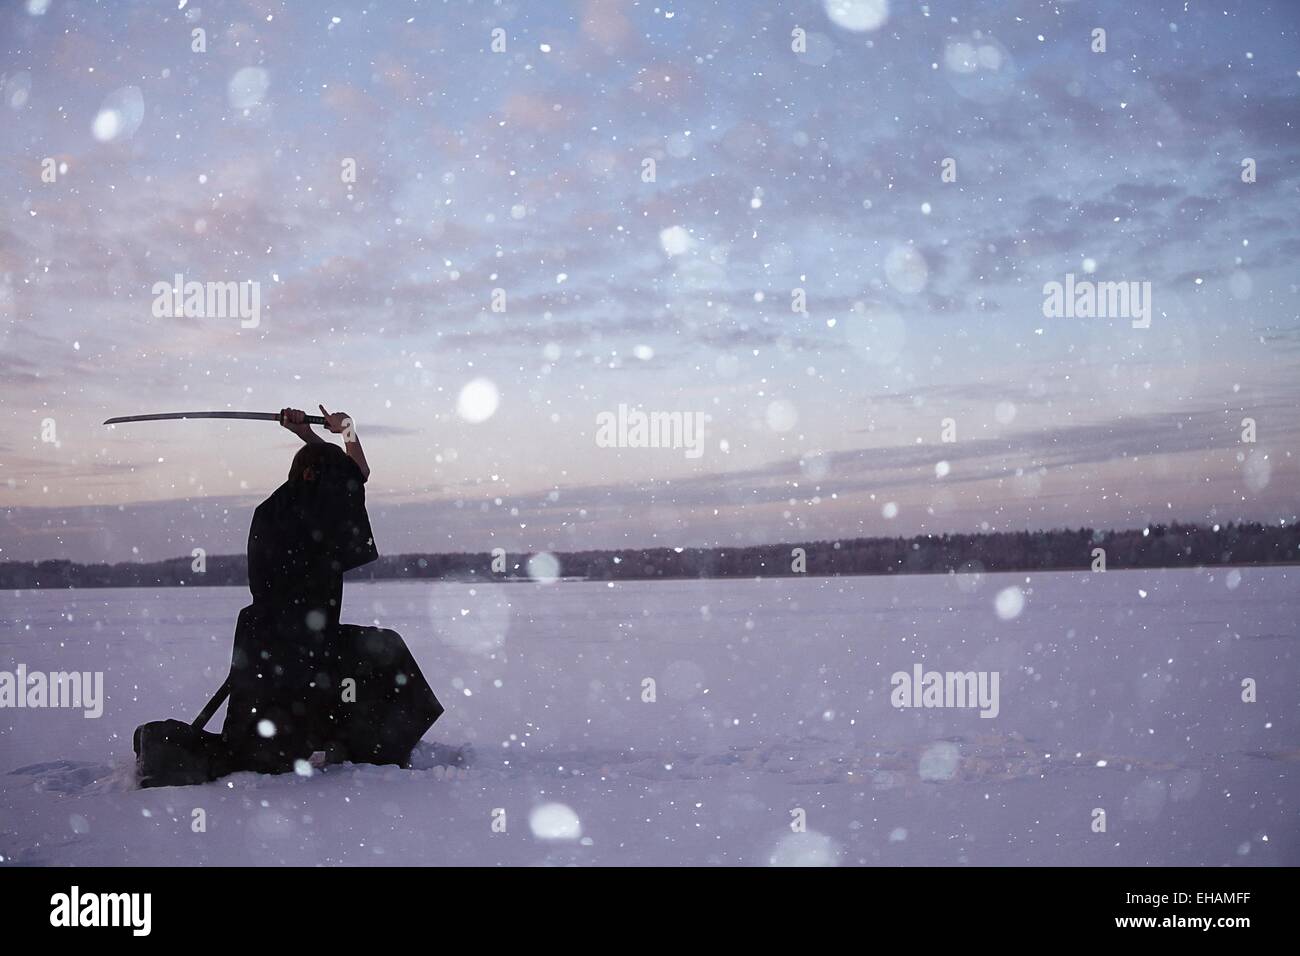 Ice Katana High Resolution Stock Photography and Images - Alamy